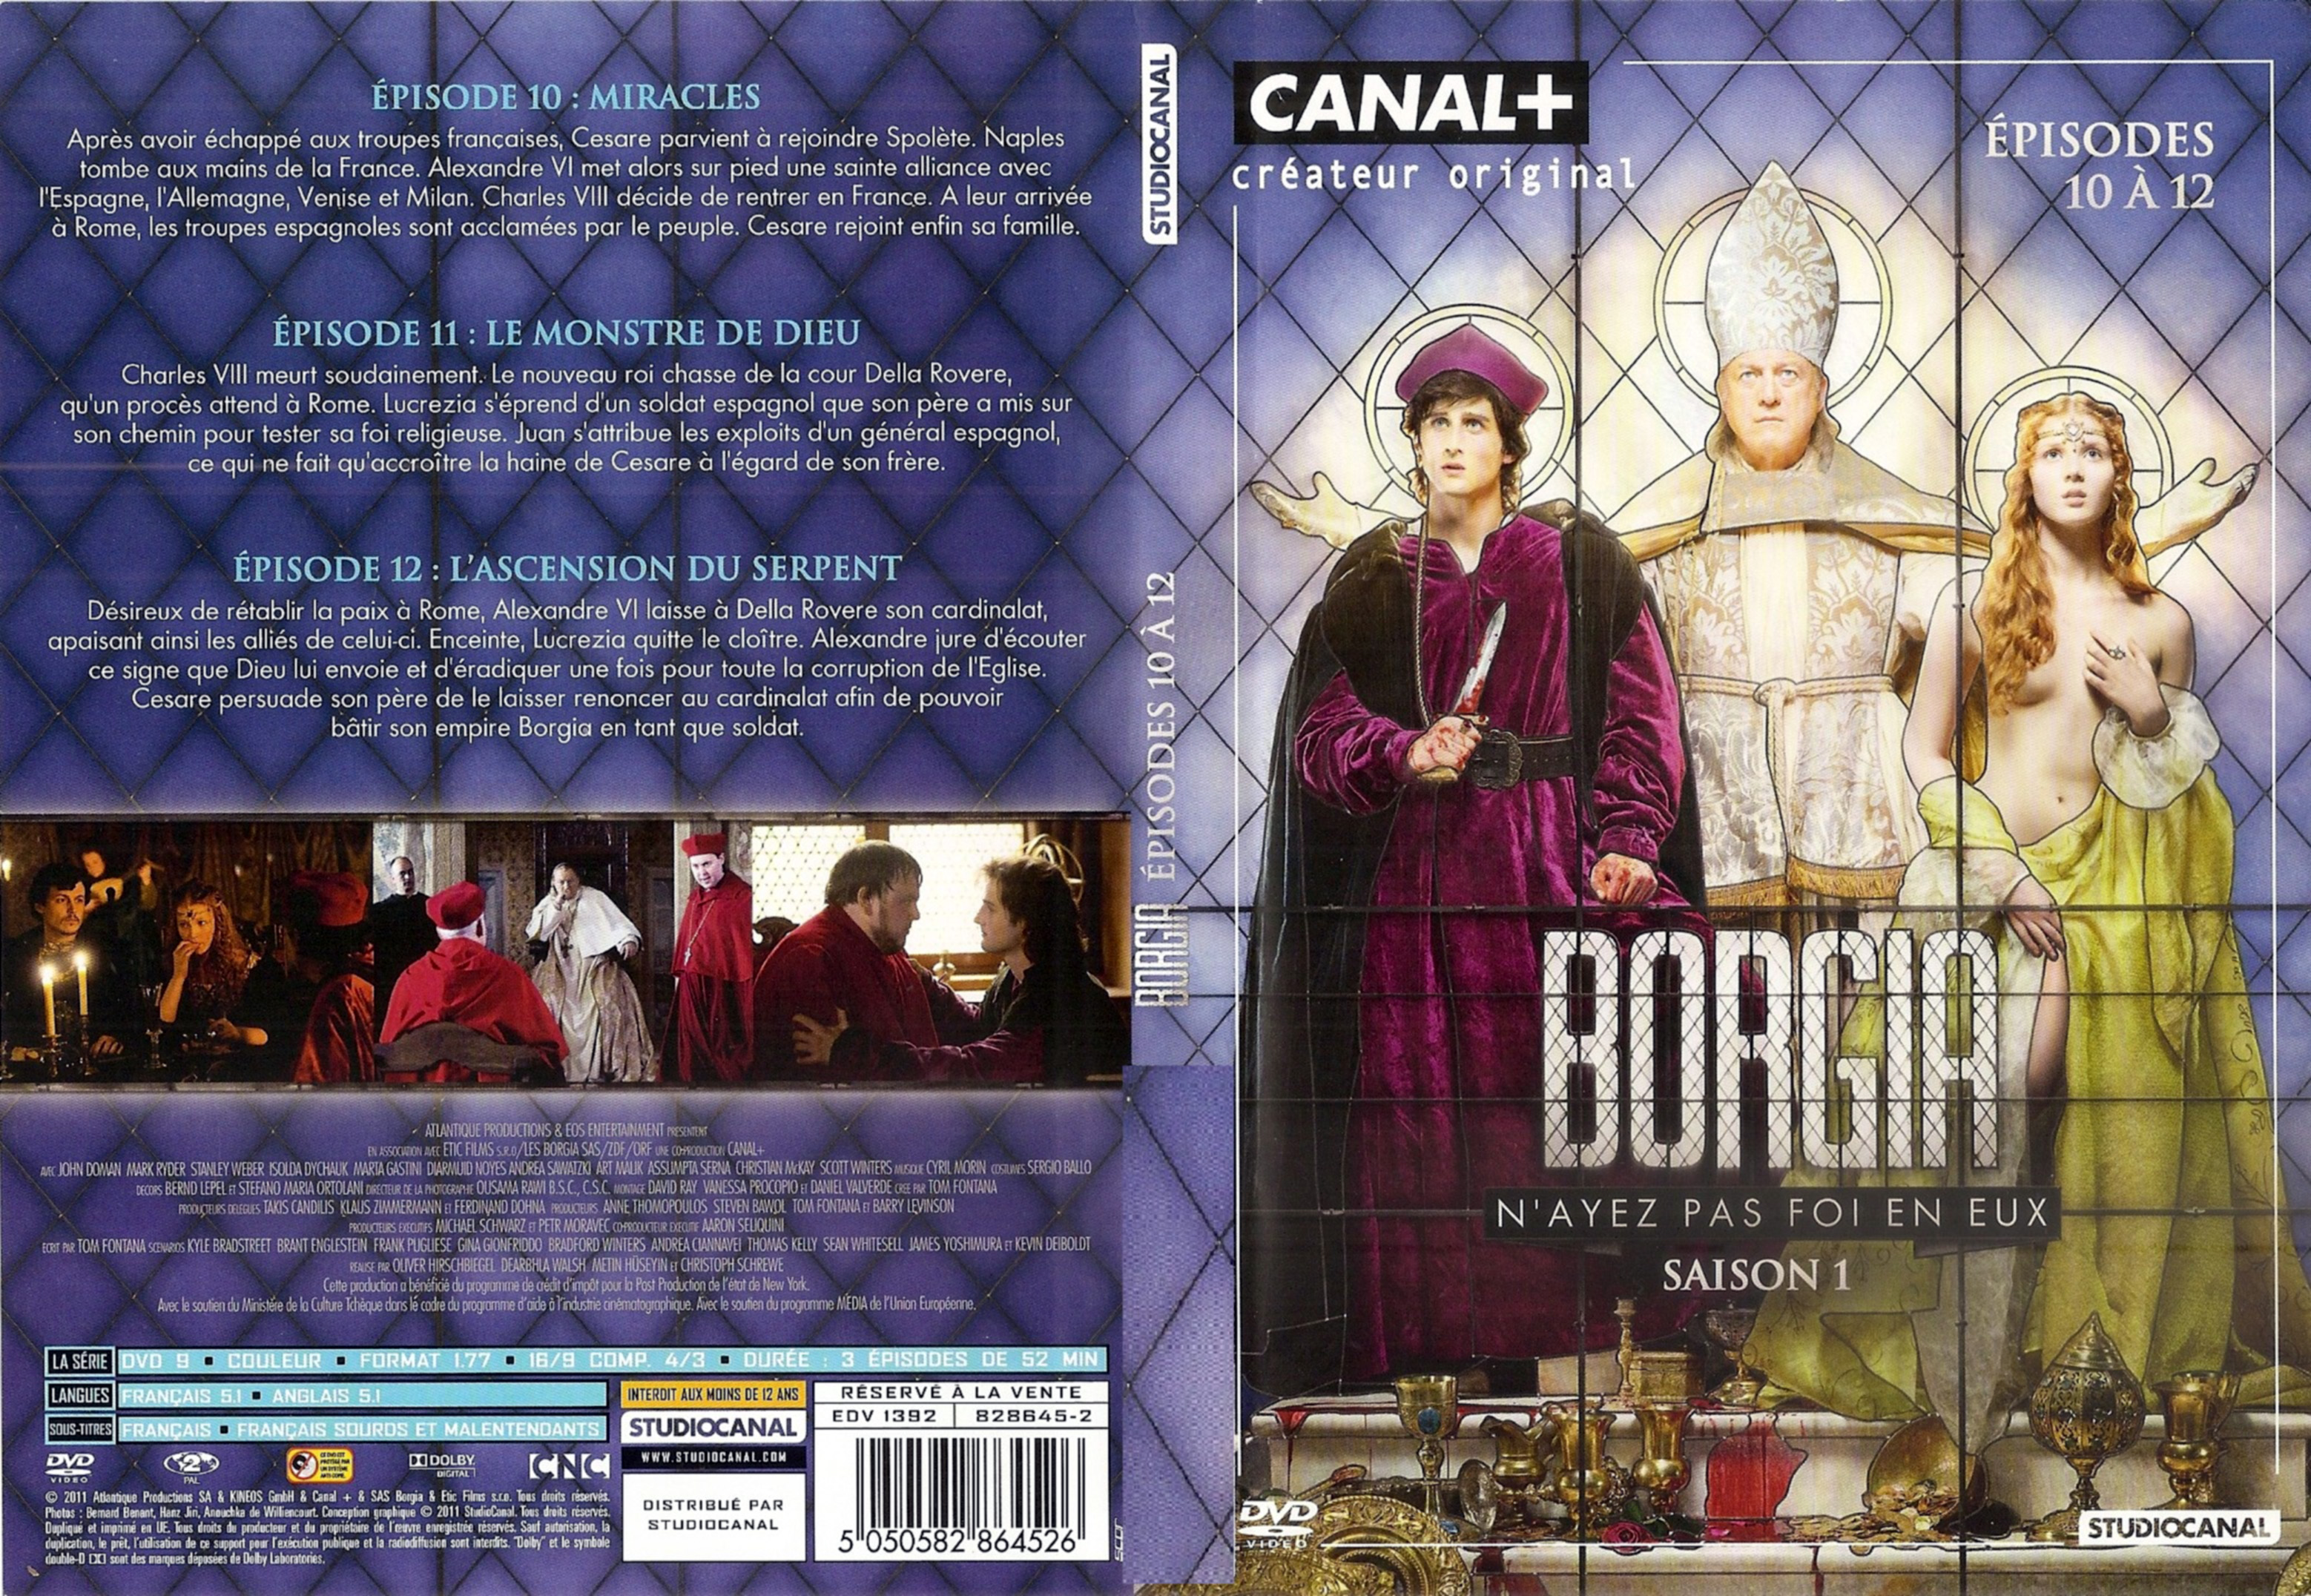 Jaquette DVD Borgia Saison 1 DVD 4